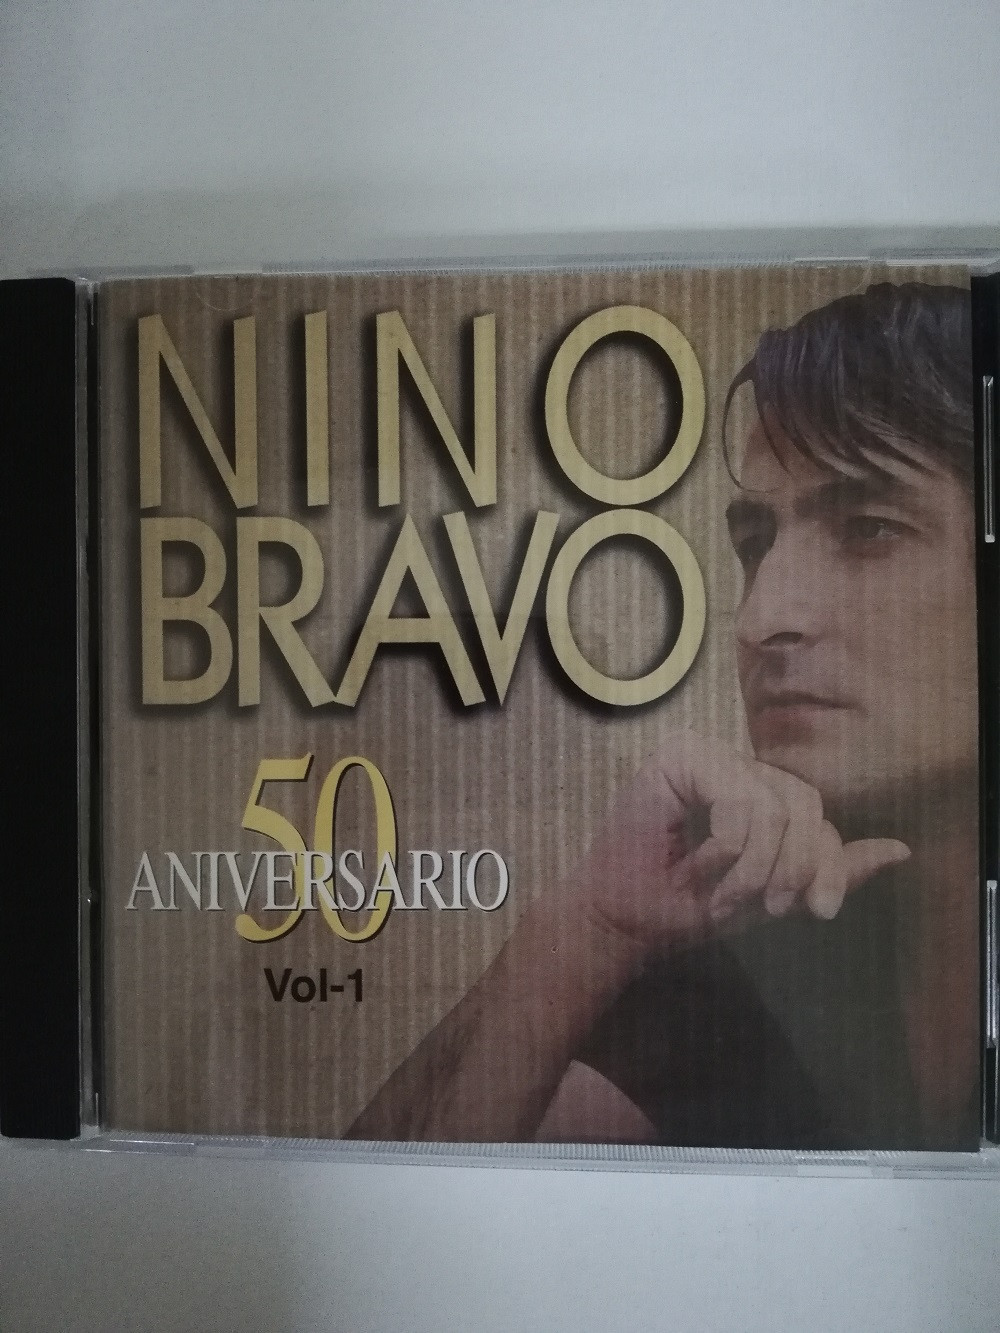 Imagen CD NINO BRAVO - 50 ANIVERSARIO VOL. 1